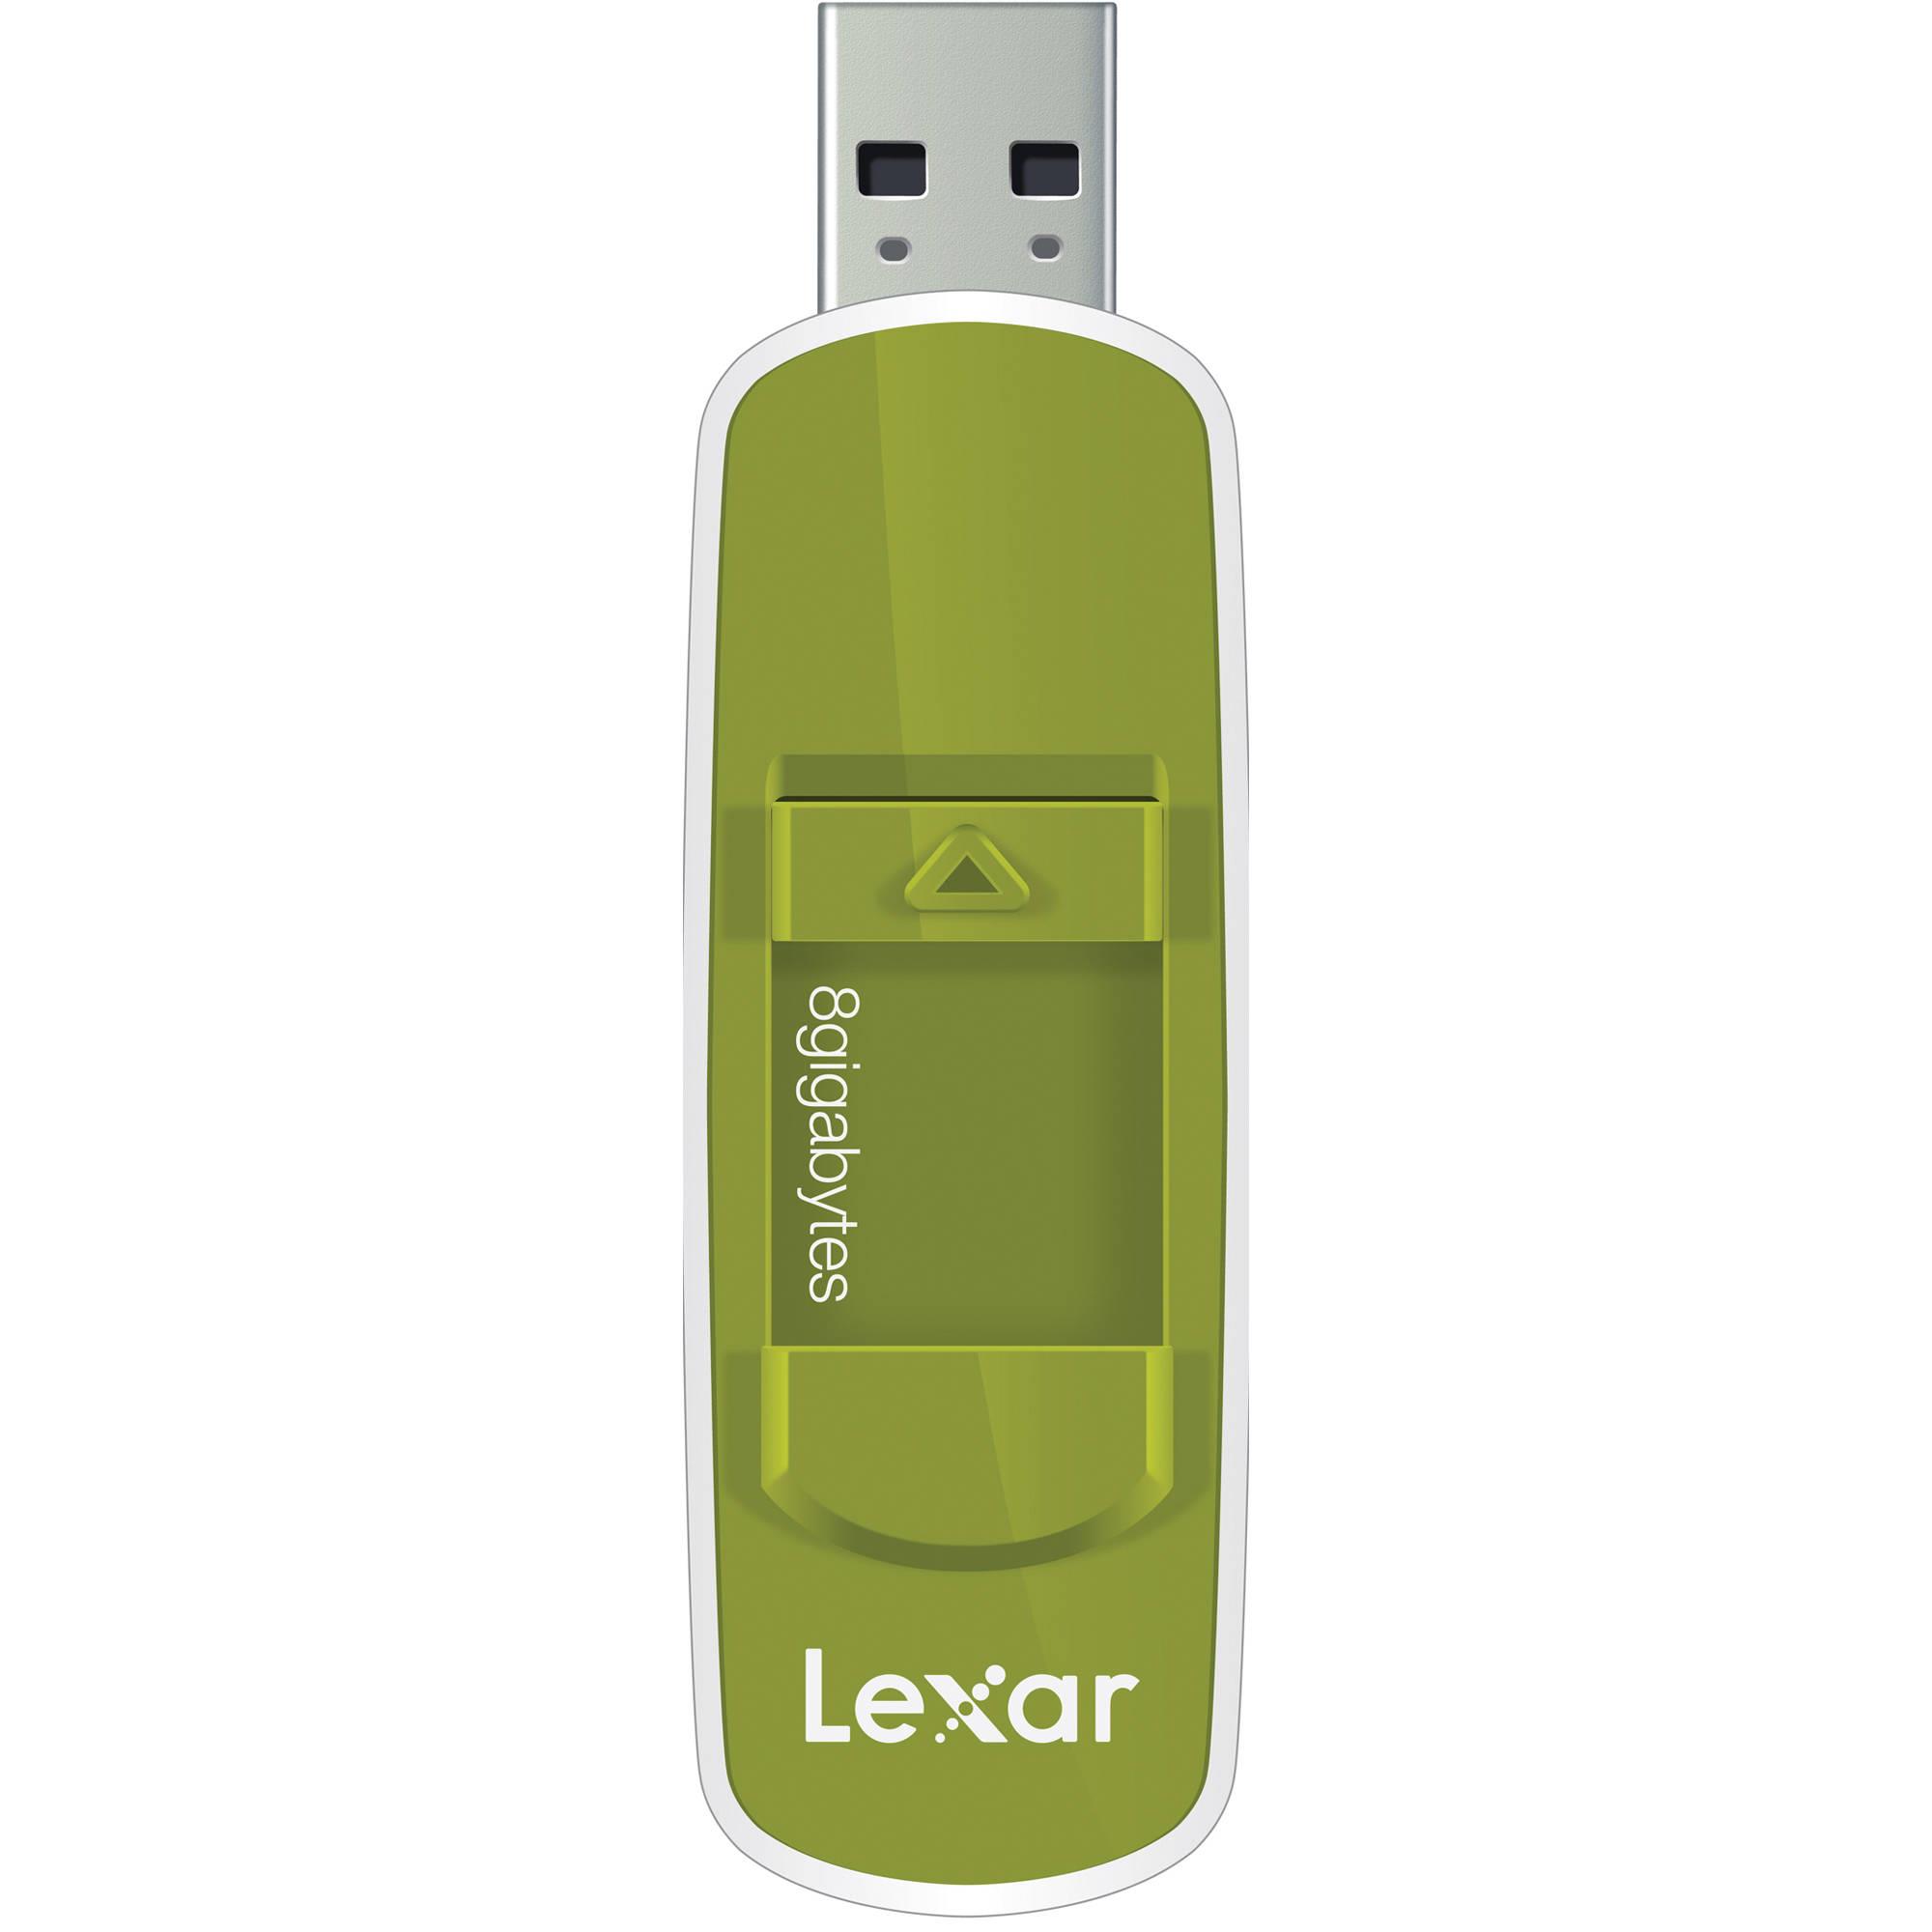 PK USB LEXAR S50 8GB